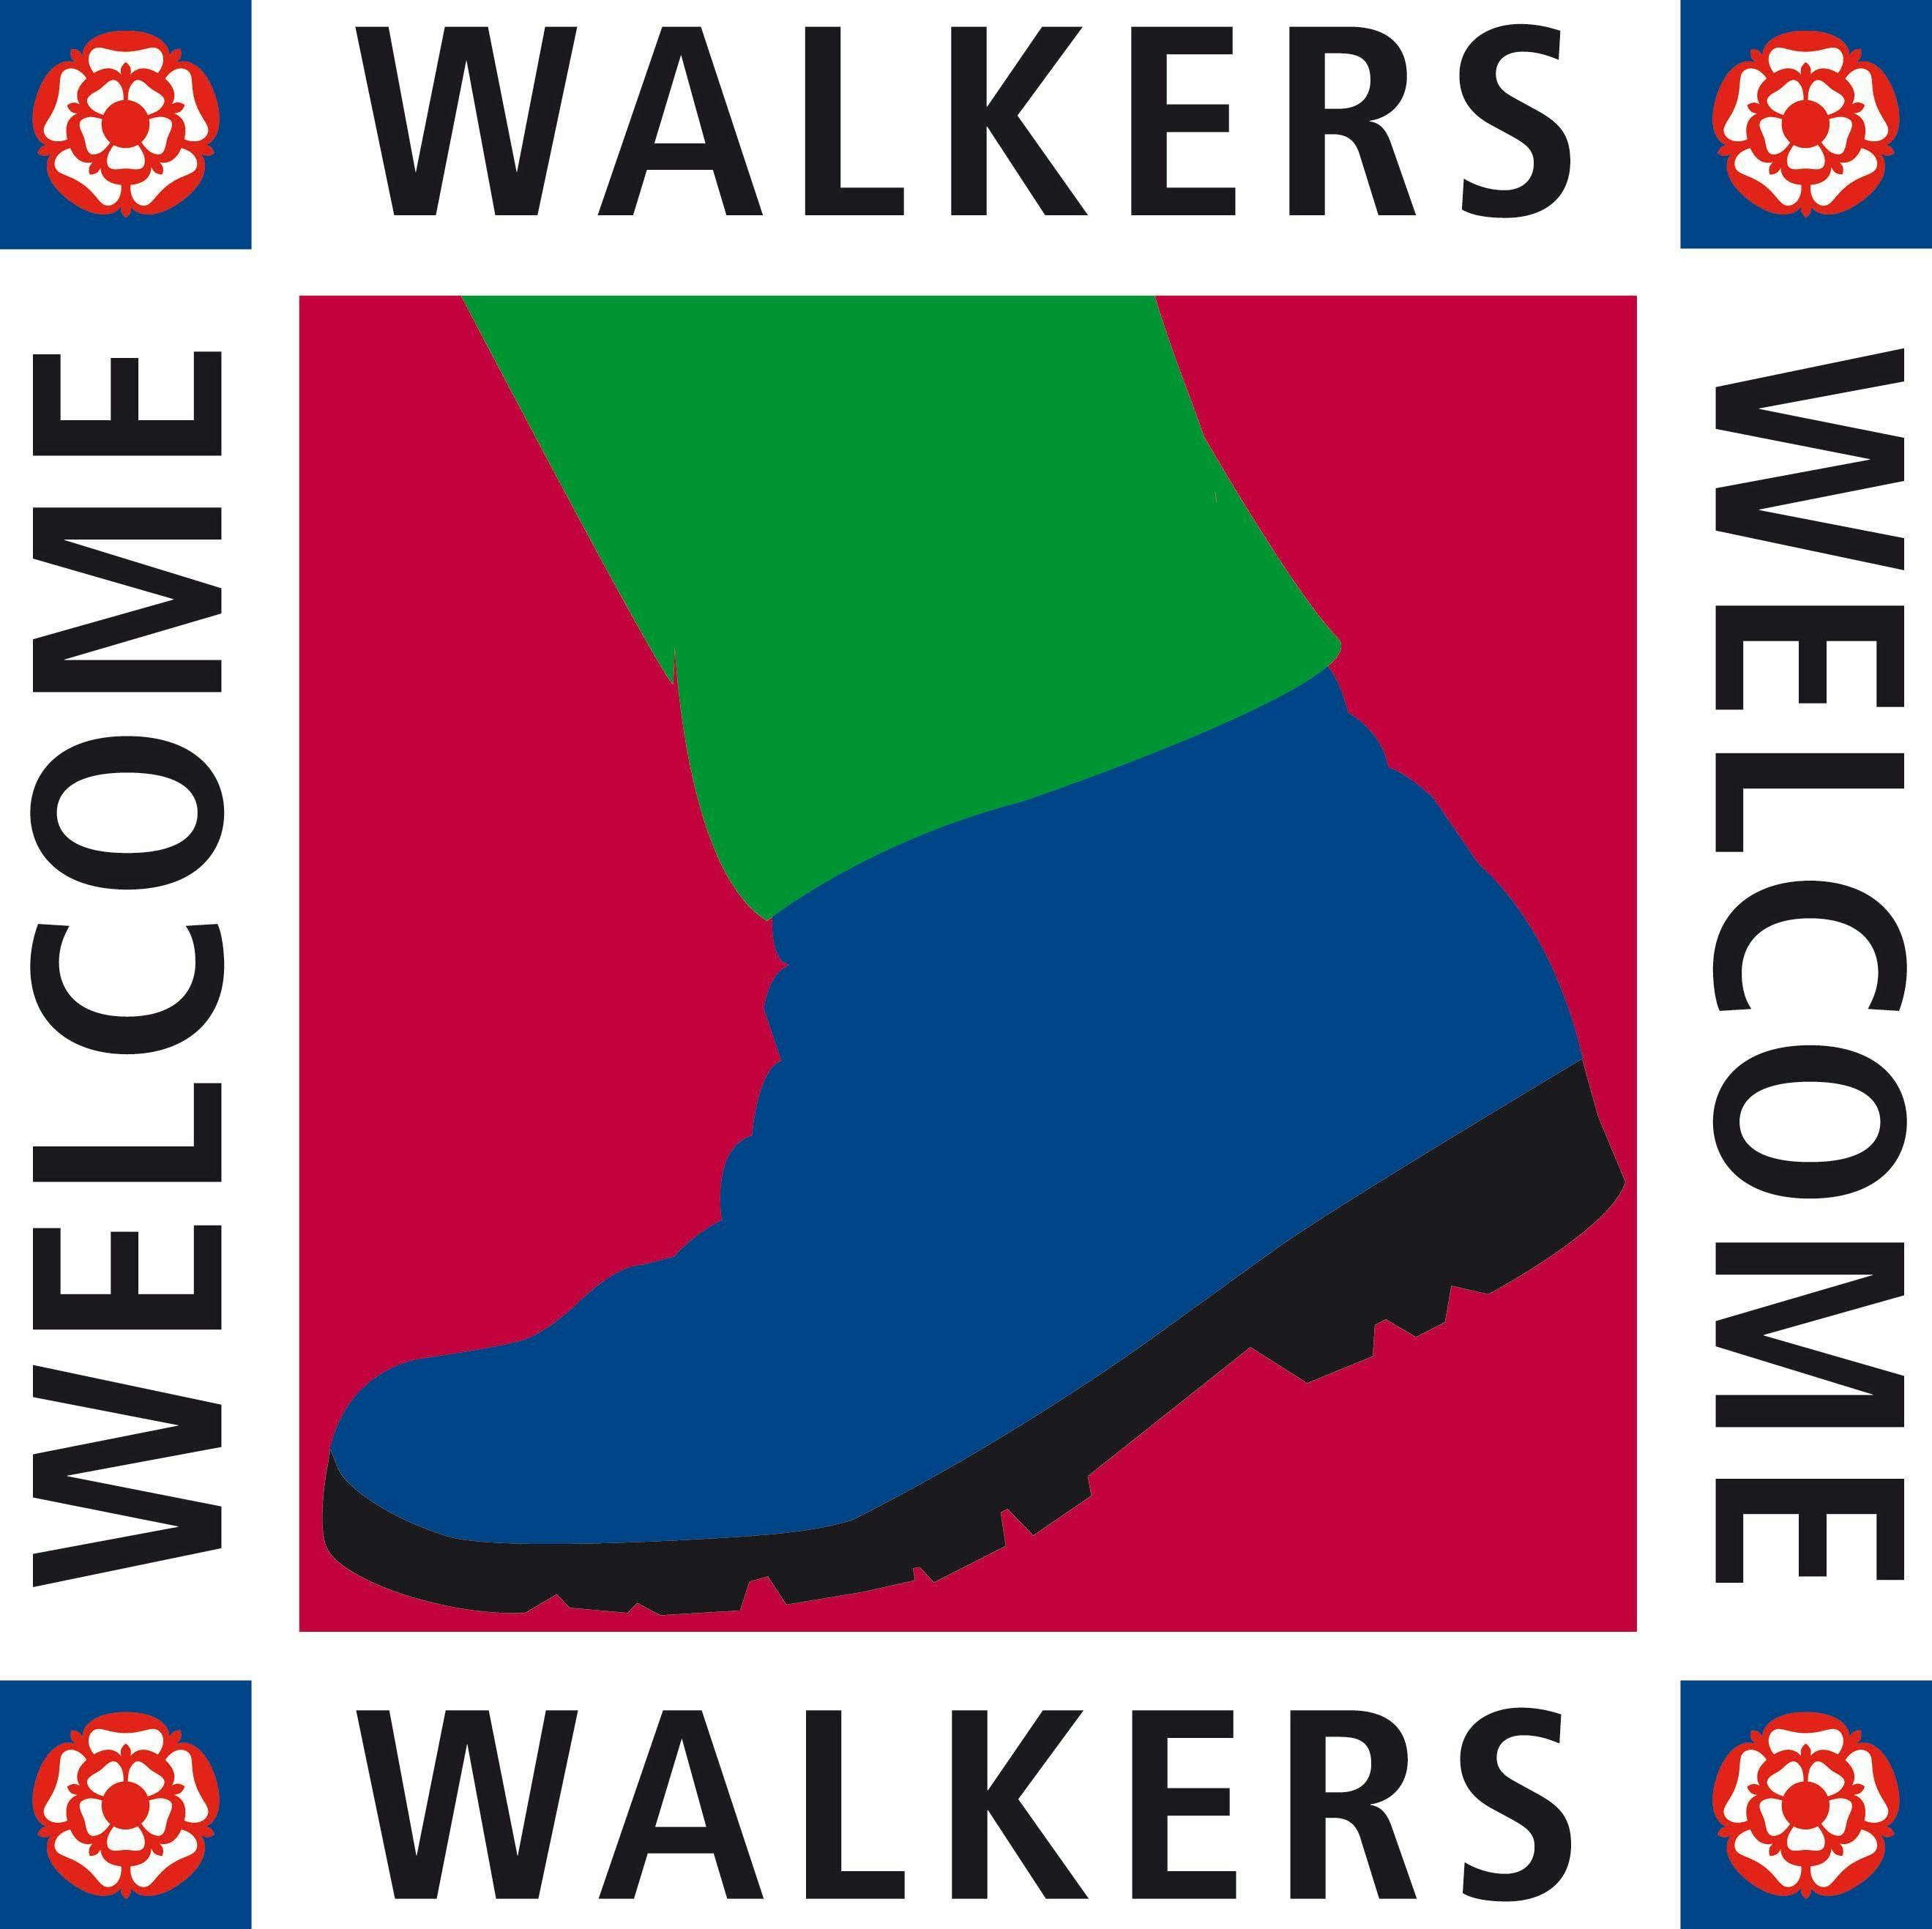 Enjoy England / Visit Britain - Welcome Walkers